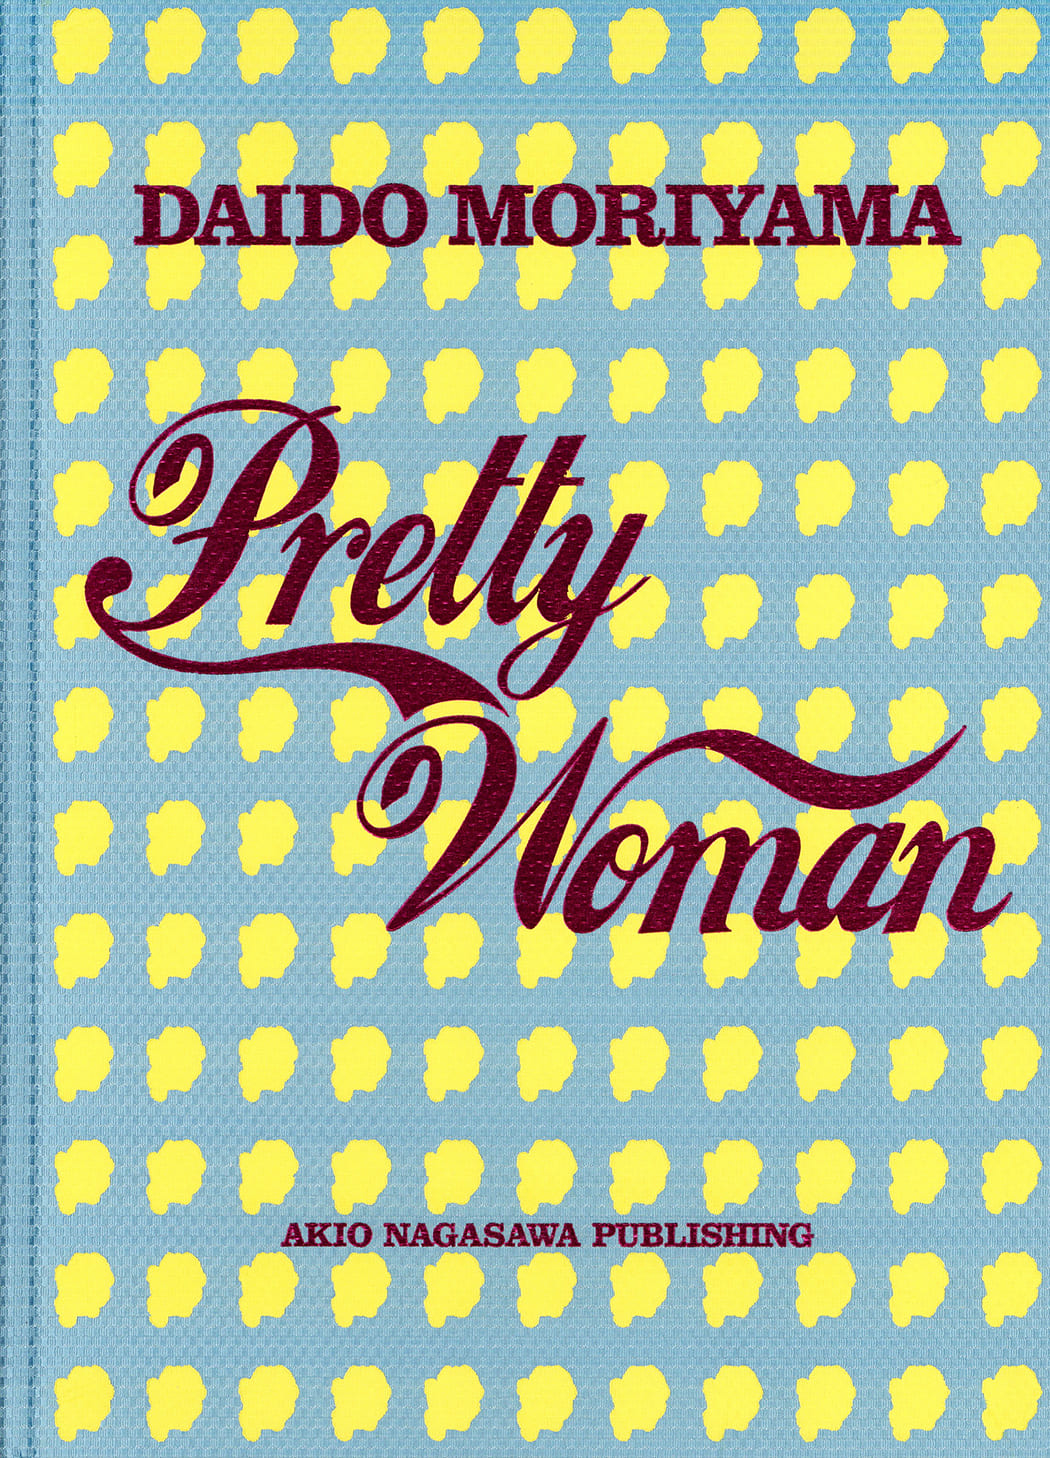 「Pretty Woman / 森山大道」メイン画像